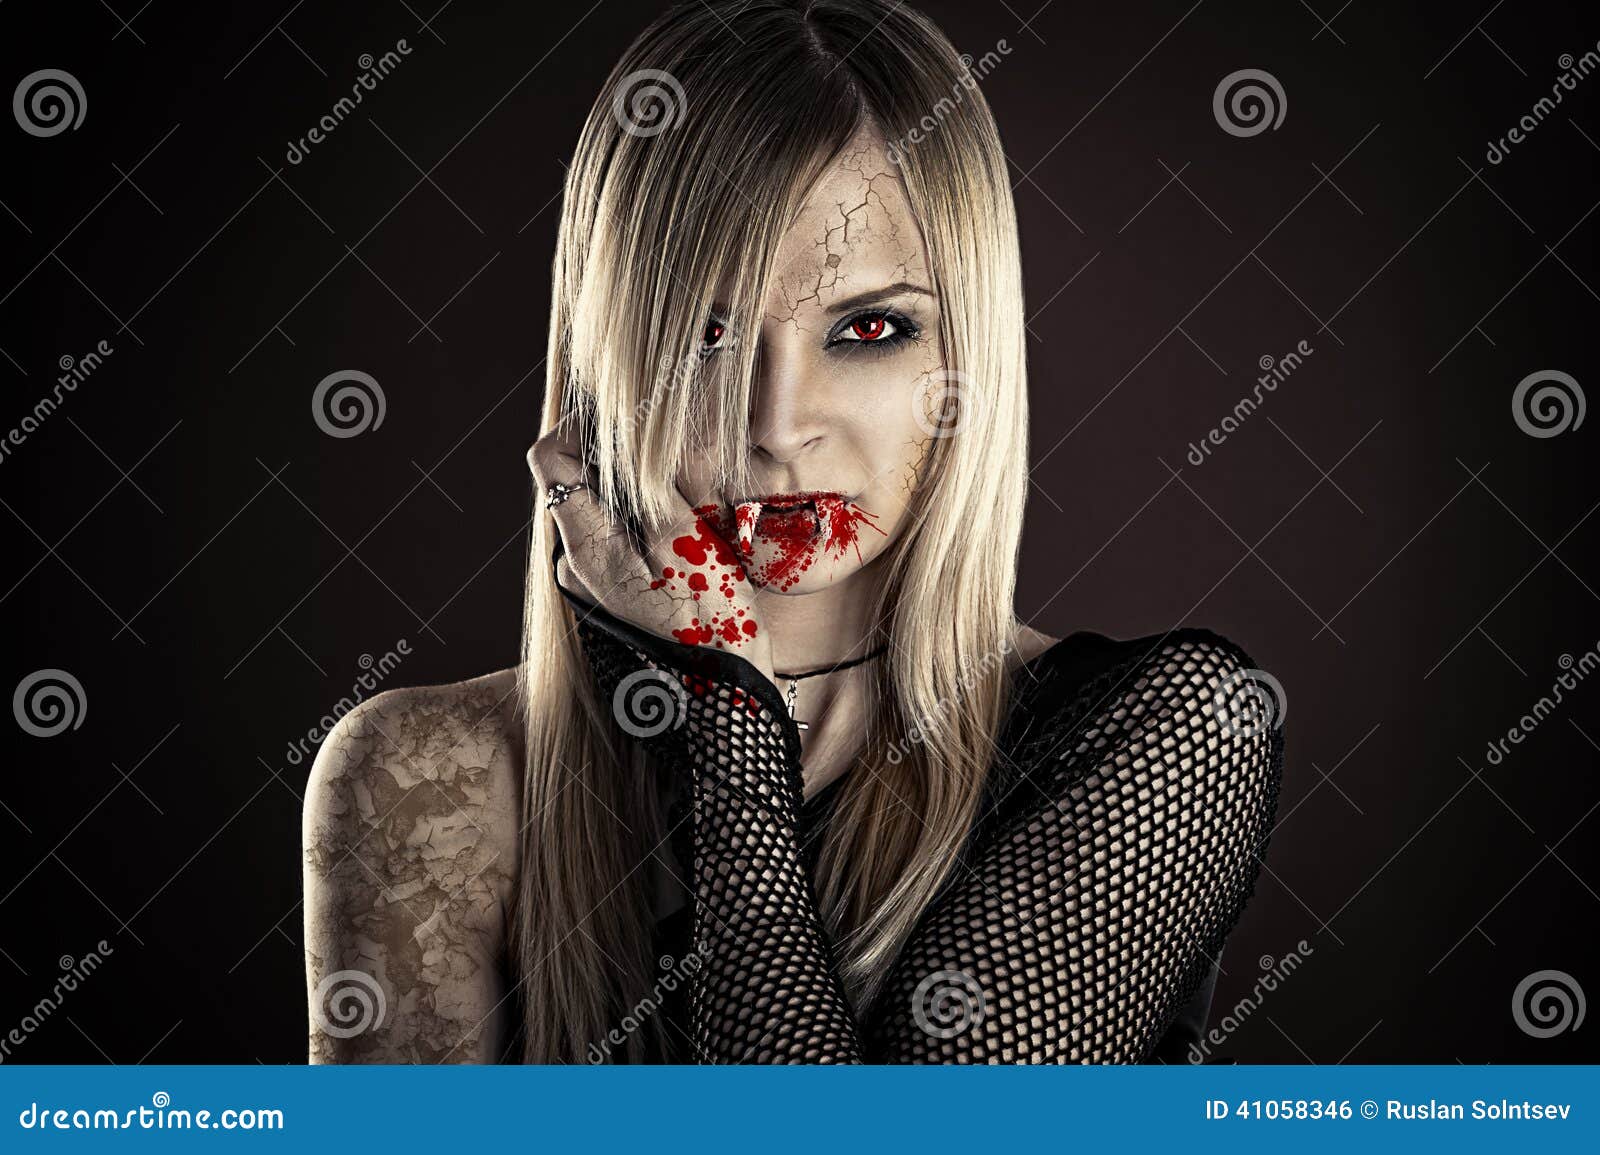 Sexy Vampire Women Photos For Free 102